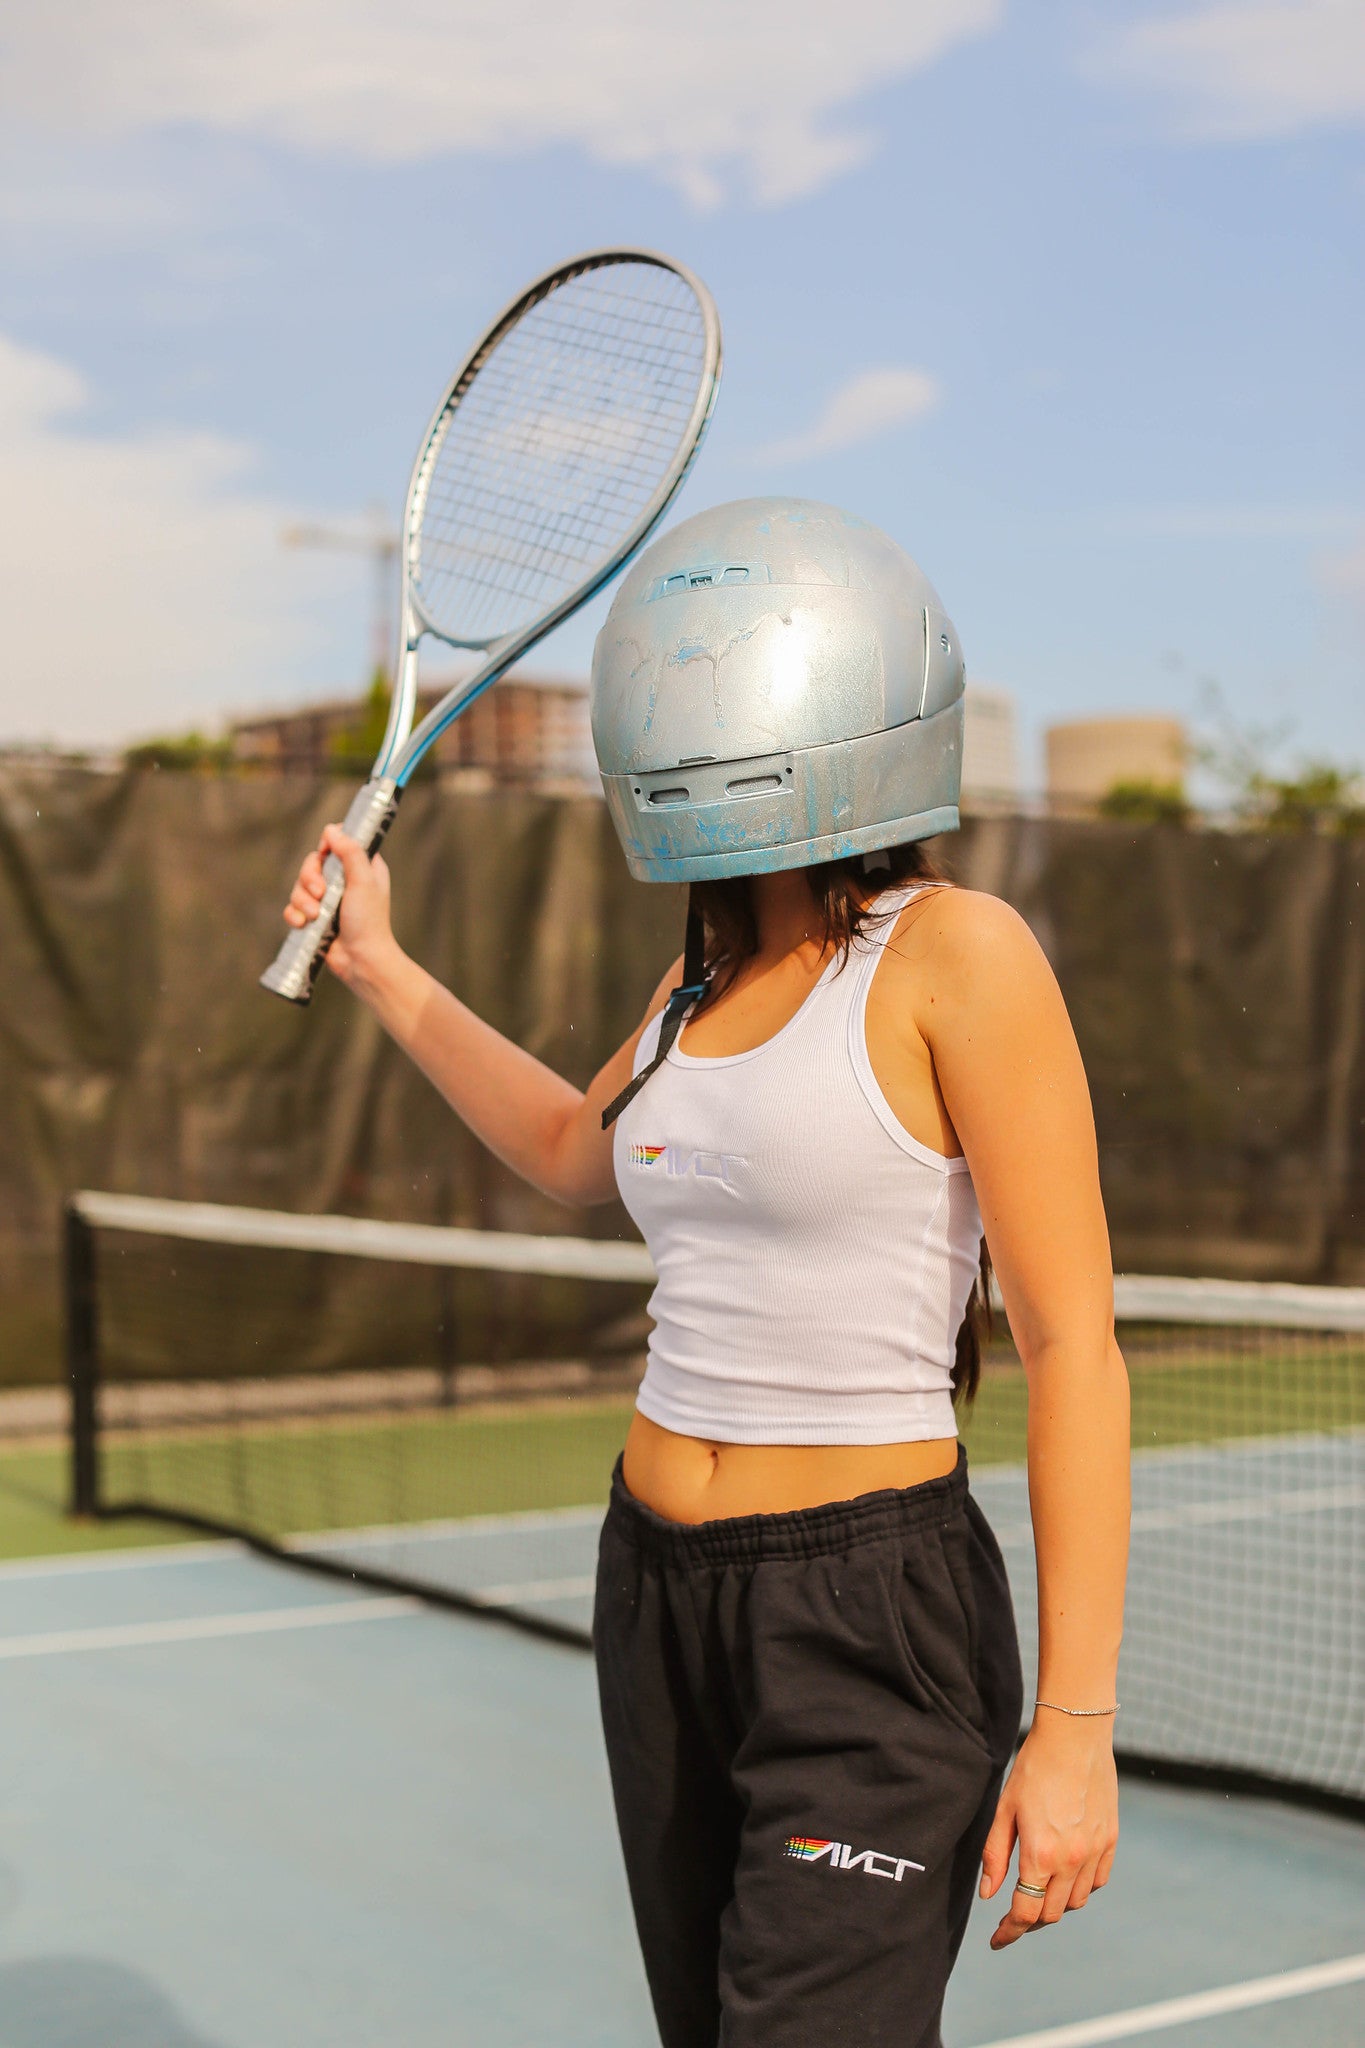 women in tank playing tennis with helmet